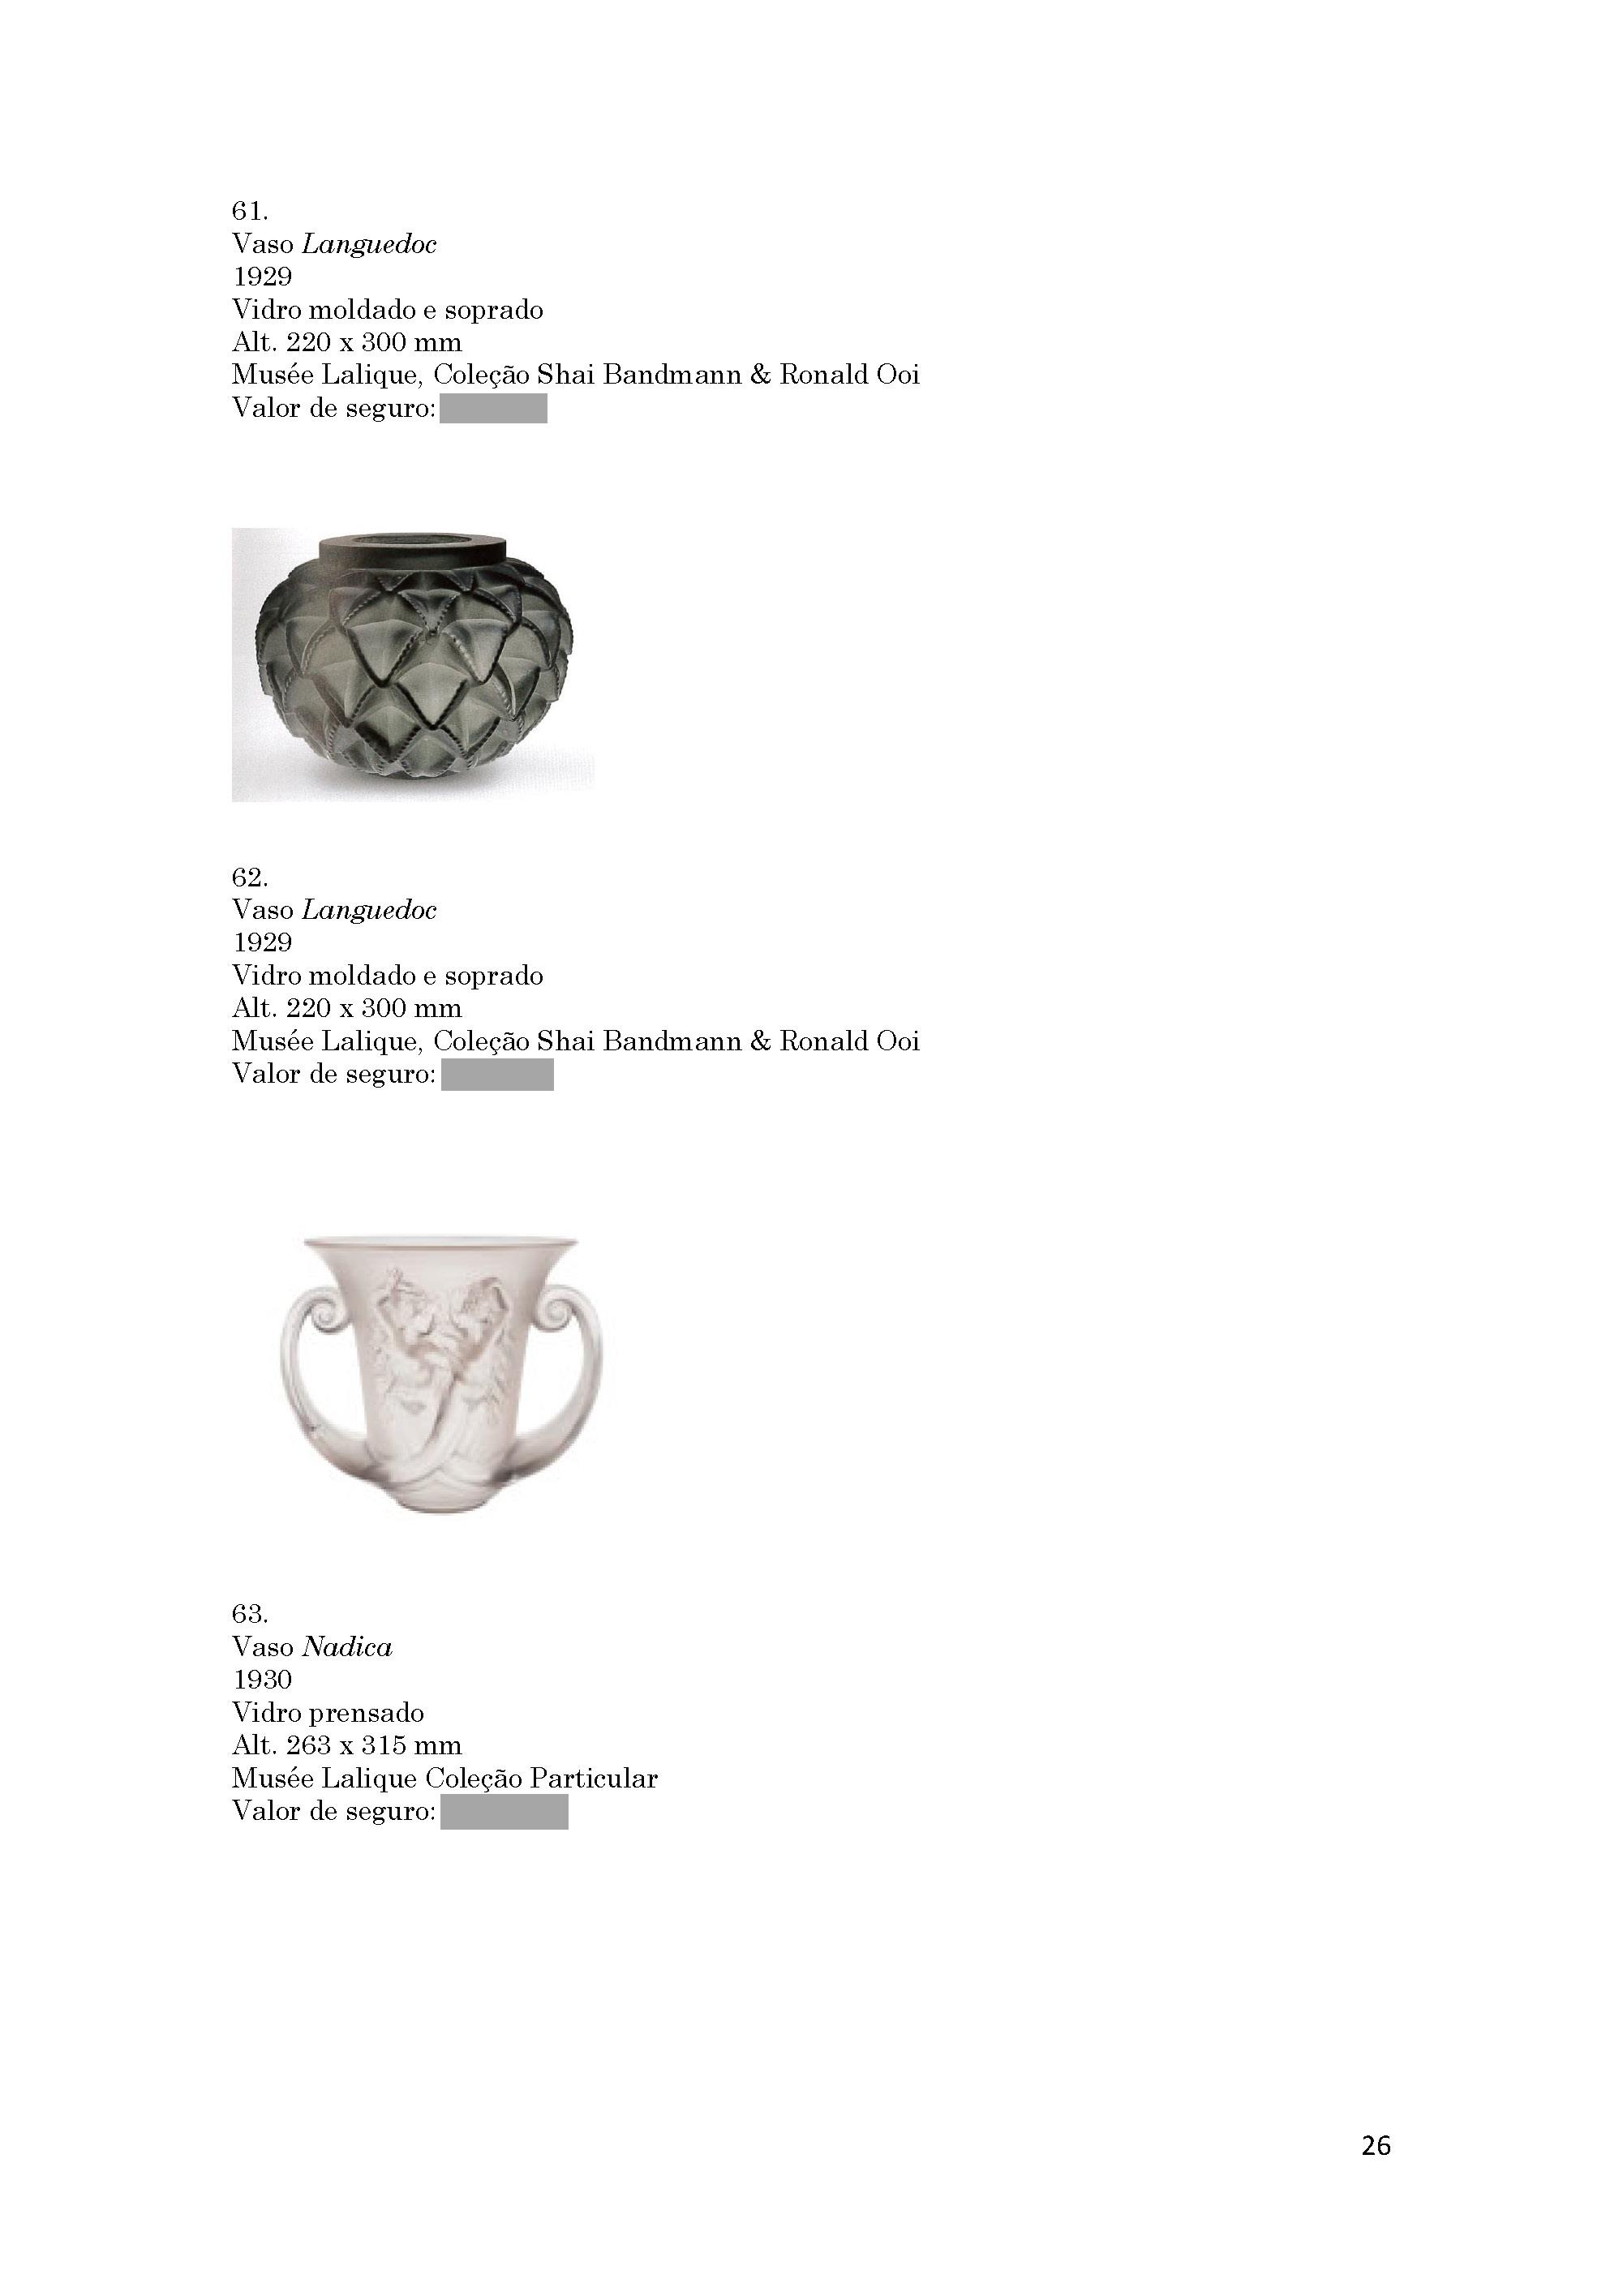 Lista_Vidros_Lalique_25.09.2020_1.26